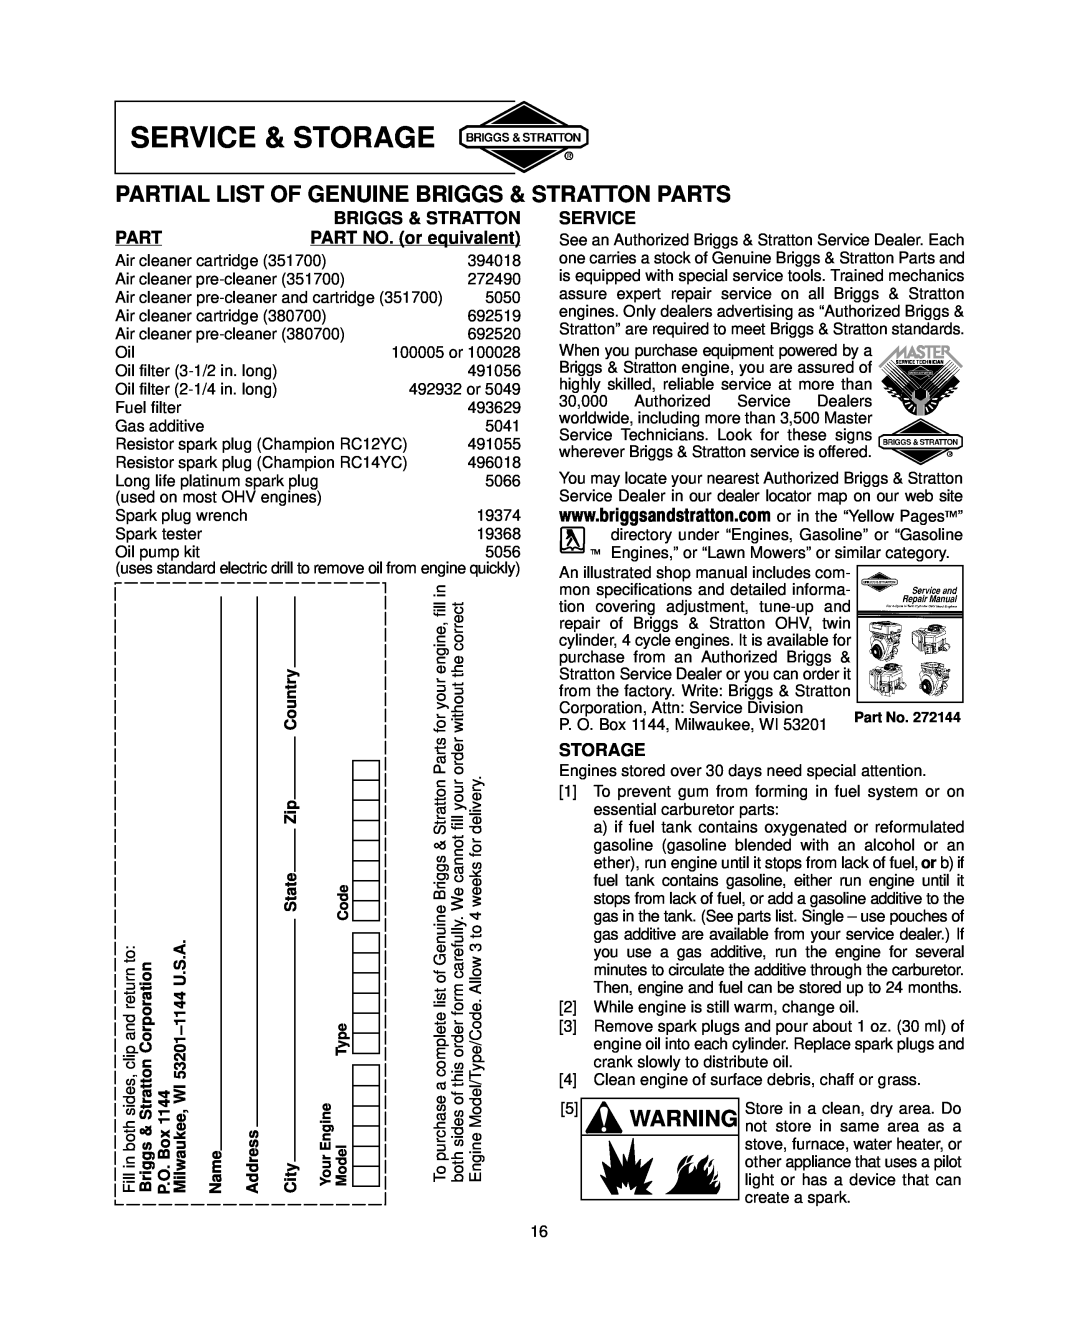 Briggs & Stratton 381700 Service & Storage, Partial List Of Genuine Briggs & Stratton Parts, PART NO. or equivalent, Name 